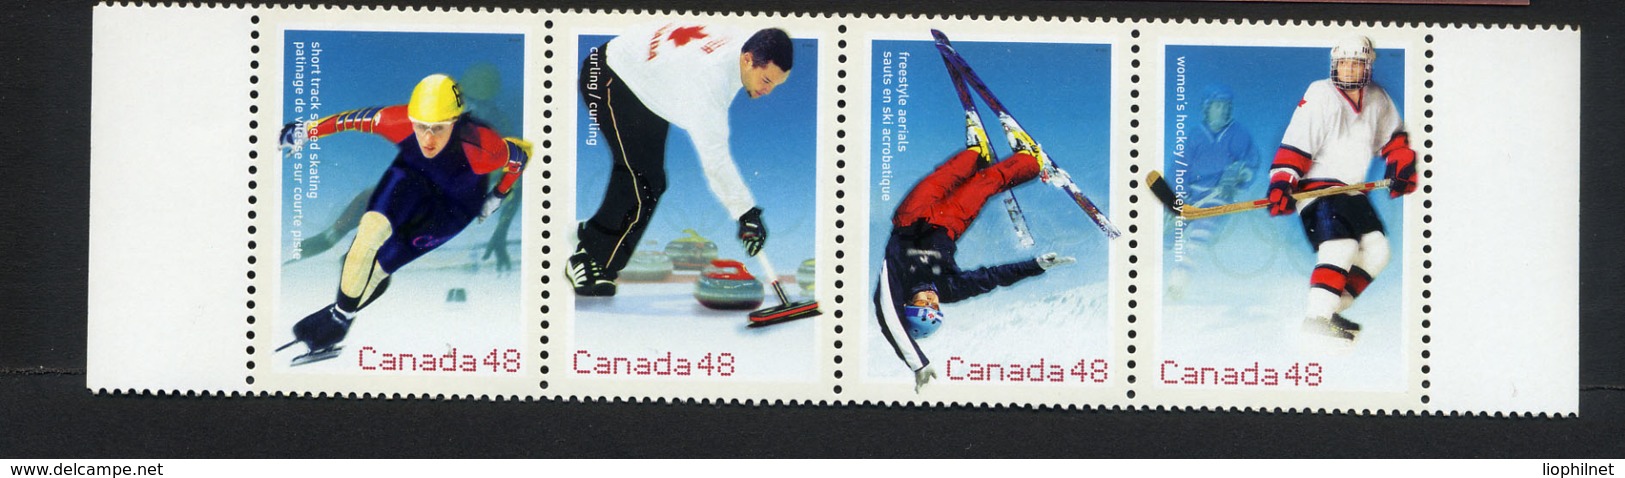 CANADA 2002, Patinage De Vitesse, Curling, Hockey, Ski Acrobatique, 4 Valeurs, Neufs / Mint. R1528 - Inverno2002: Salt Lake City